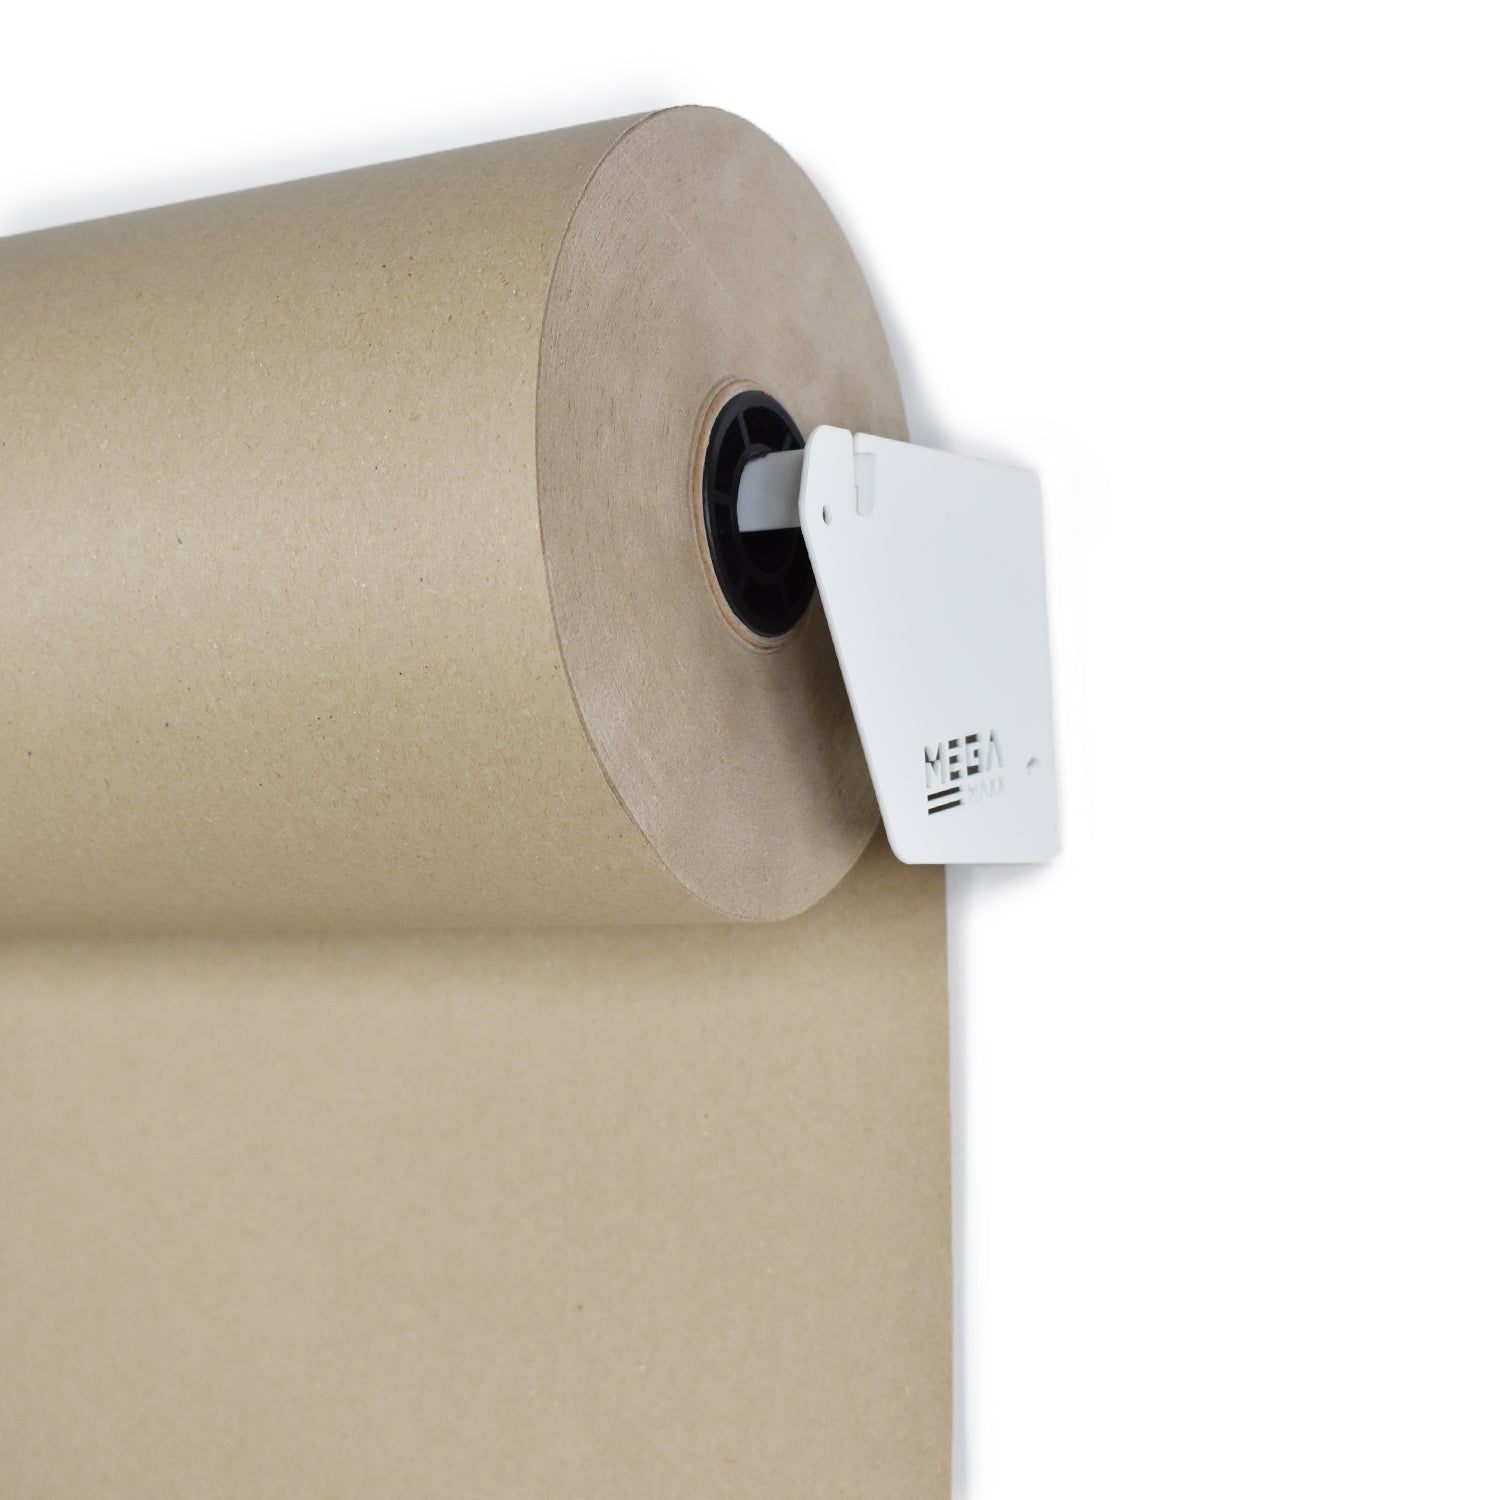 MegaMaxx UK™ Wall Mounted MaxxKraft Brown Paper Roll Dispenser - Indoor Outdoors